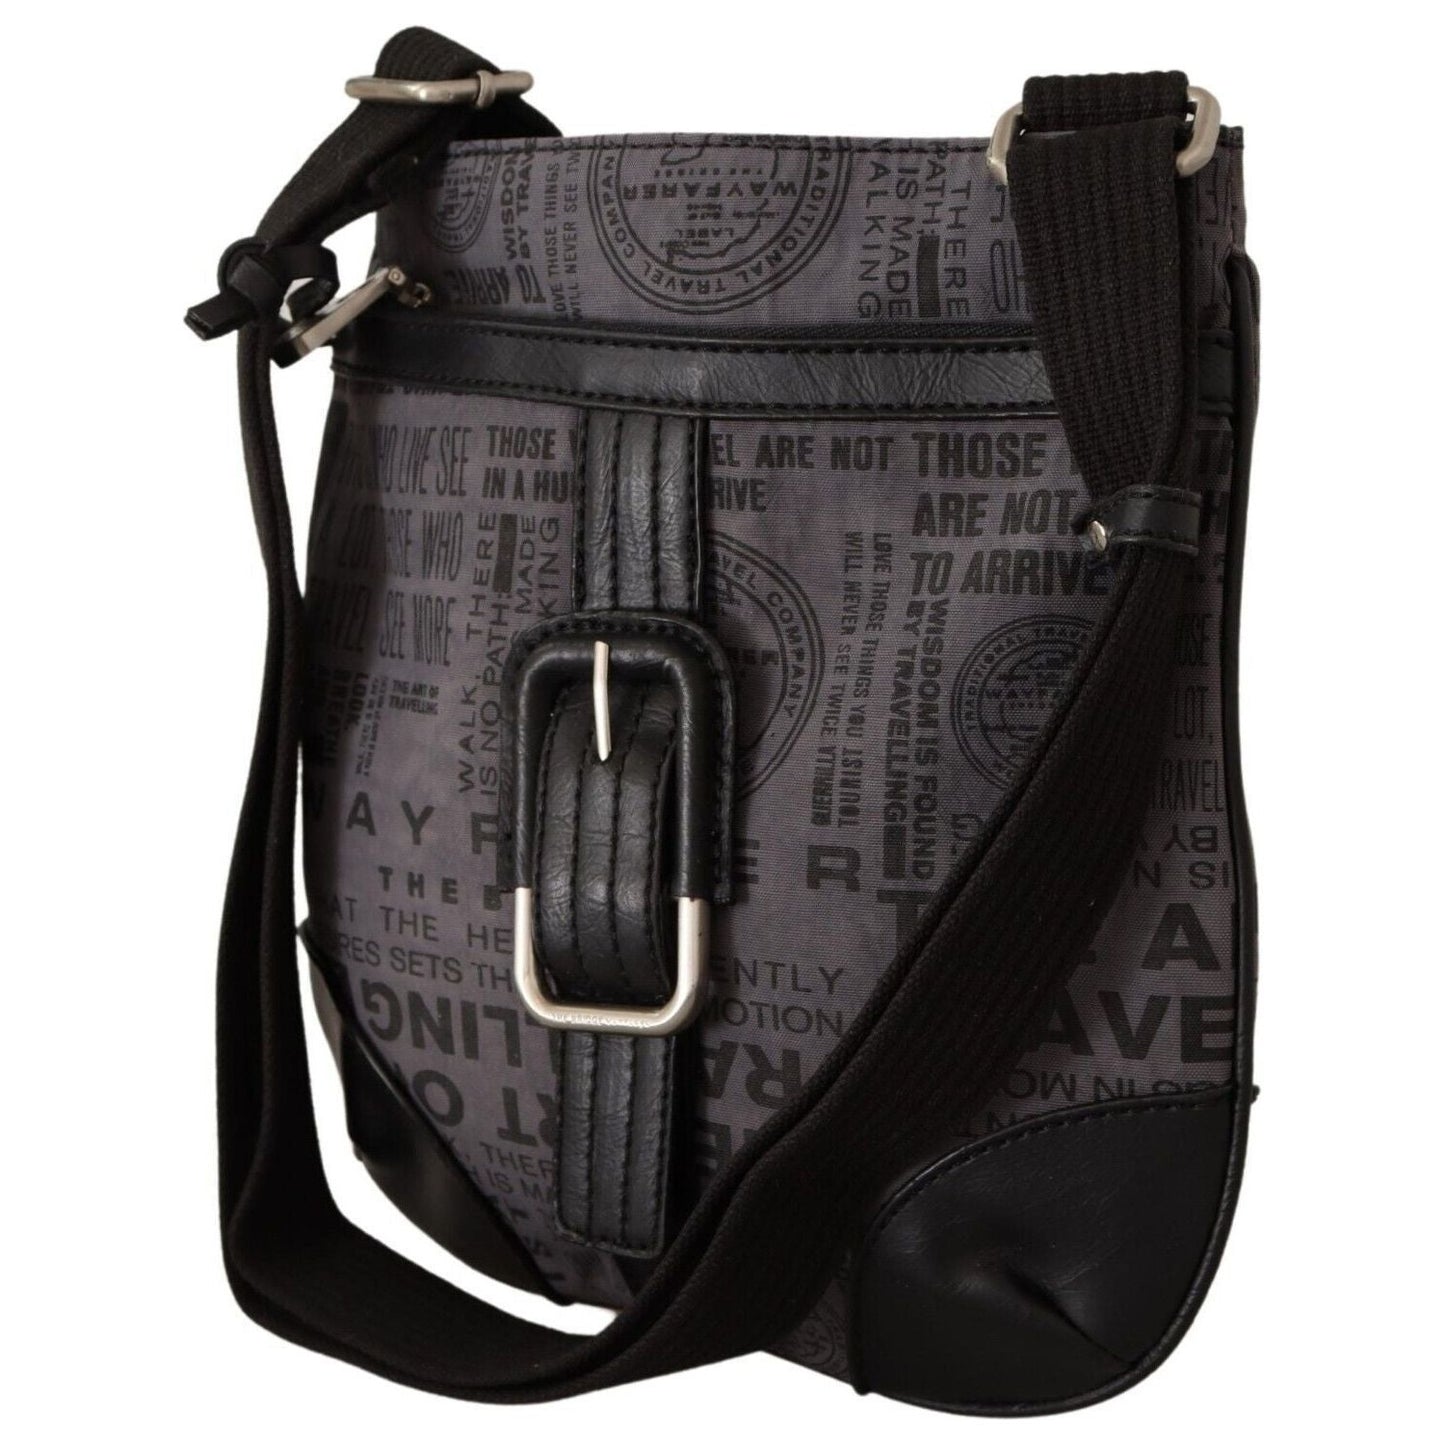 WAYFARER Chic Gray Fabric Crossbody Bag Crossbody Bag gray-printed-logo-shoulder-crossbody-purse-bag s-l1600-2-23-d7b23900-3e8.jpg